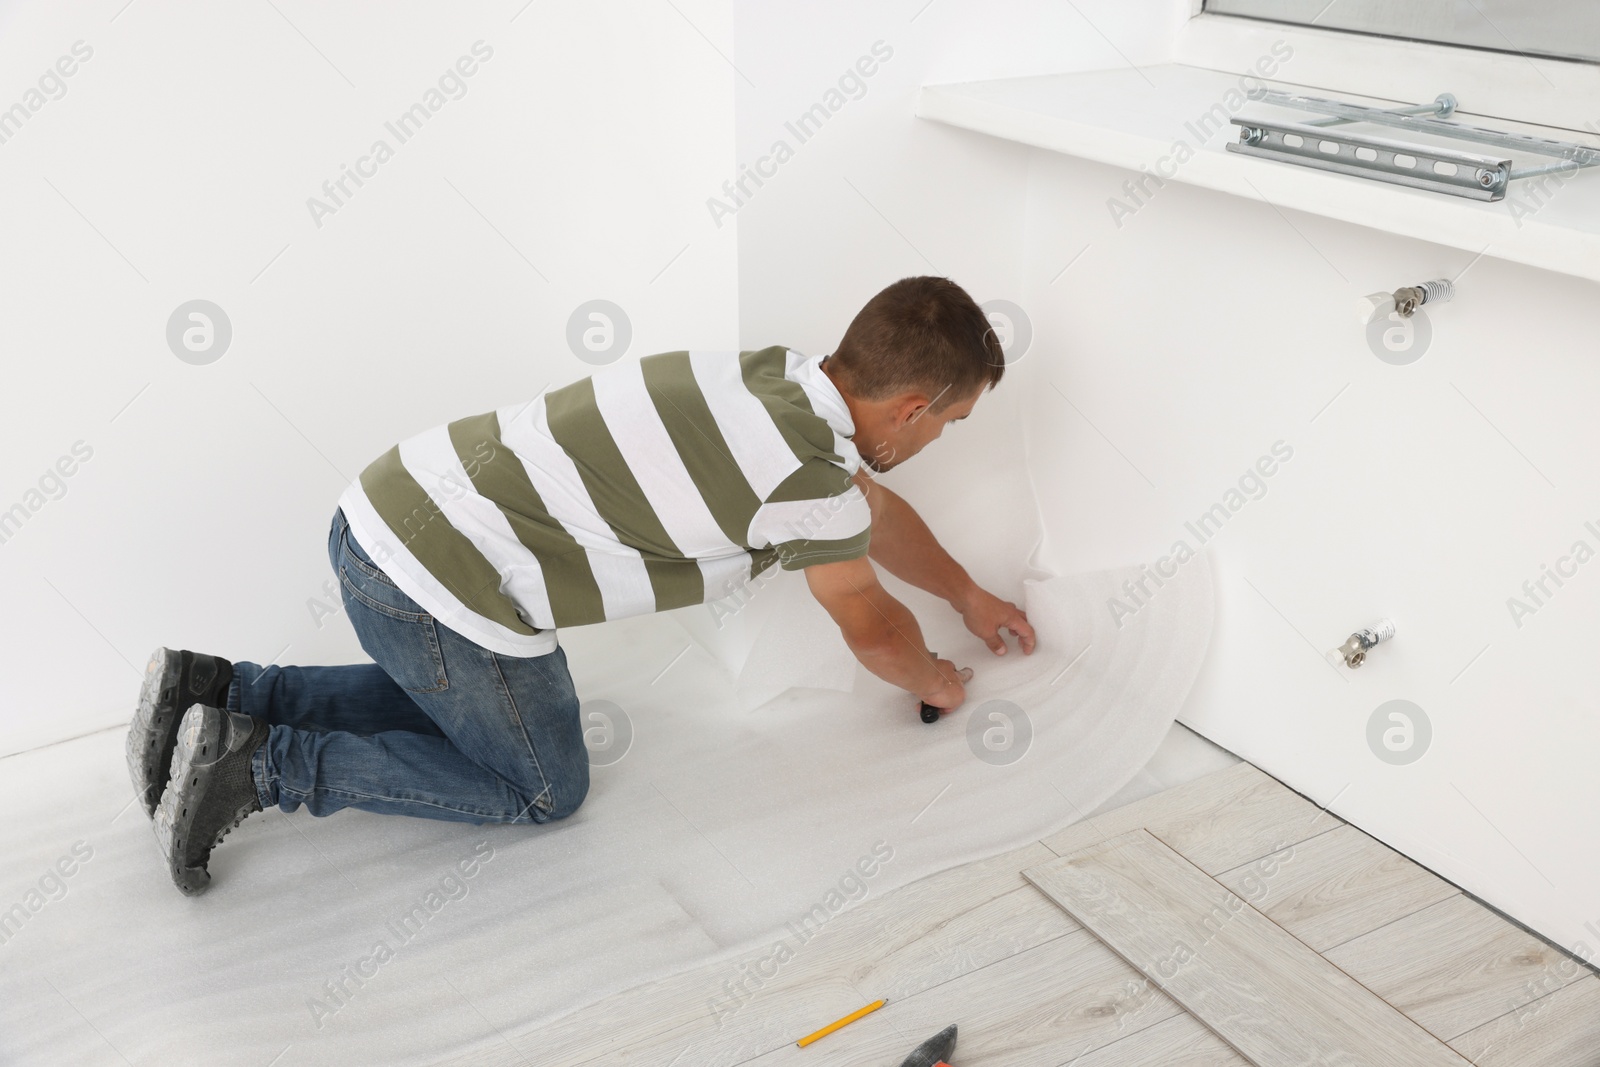 Photo of Professional worker cutting polyethylene foam during installation of laminate flooring indoors